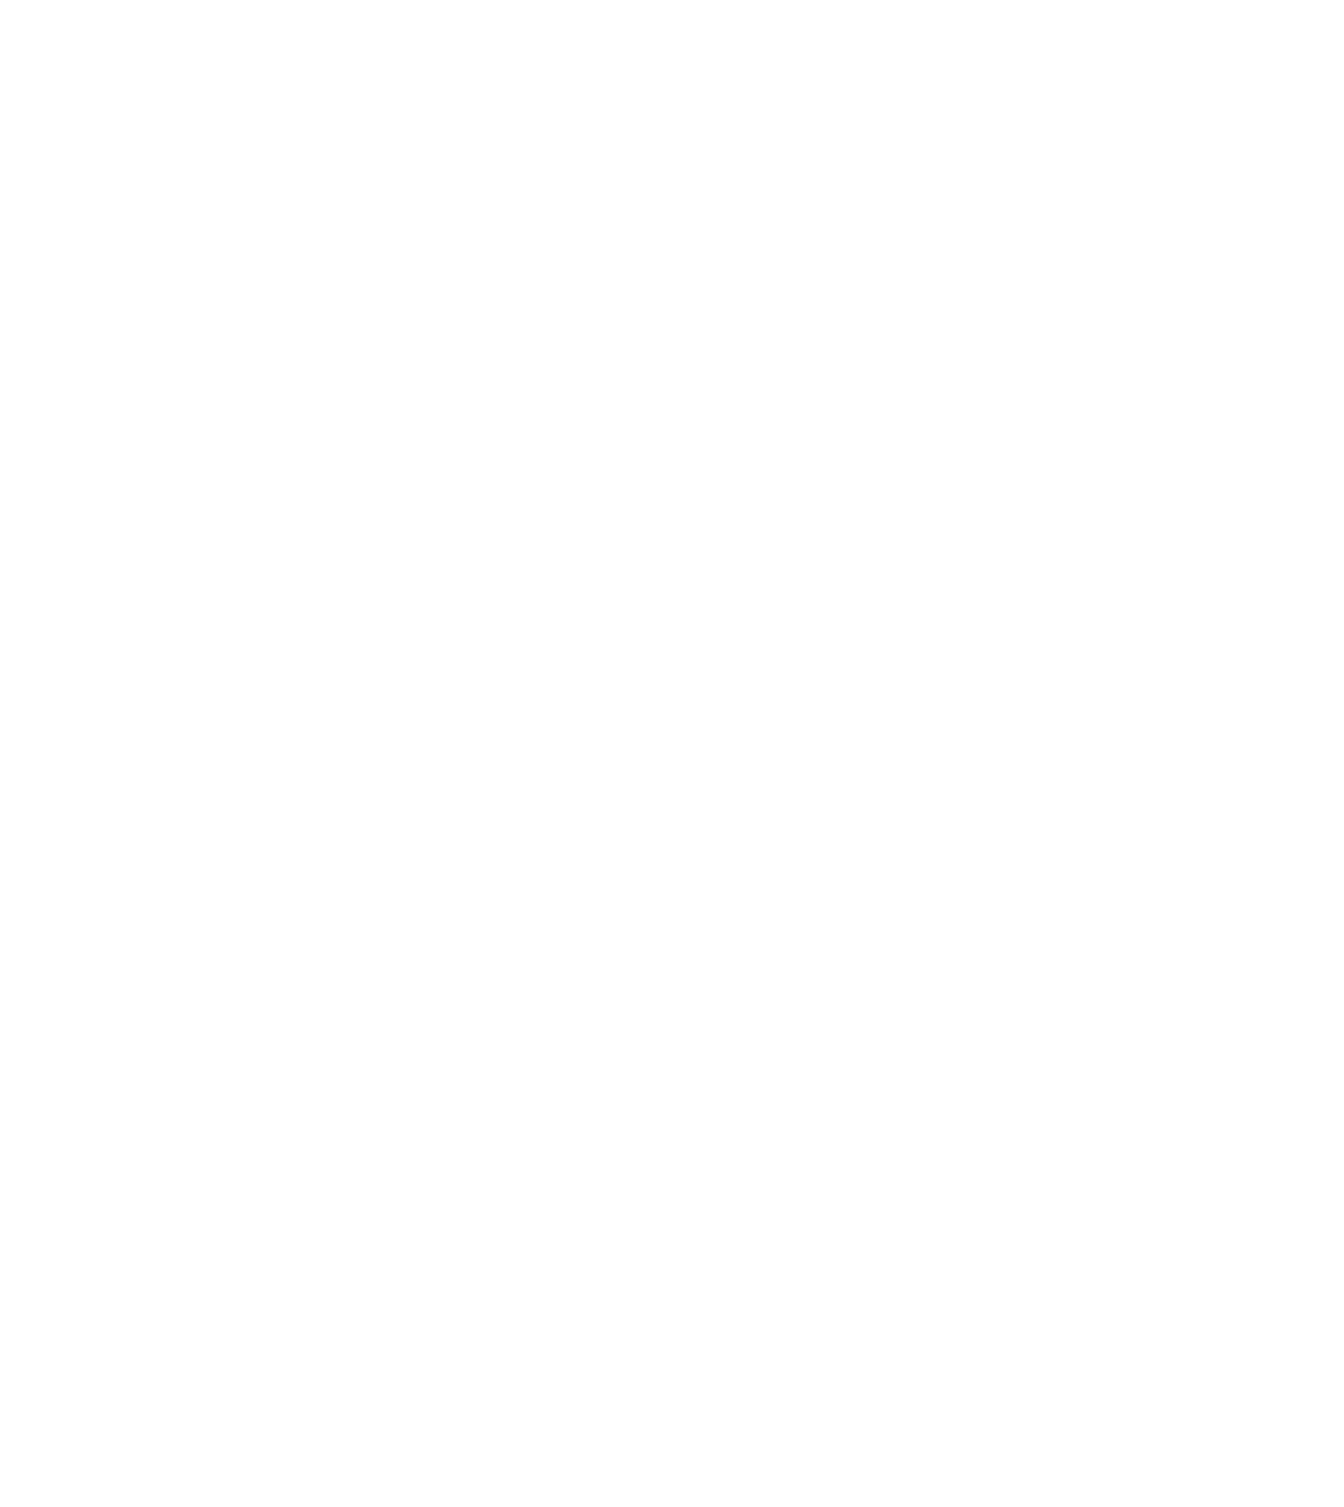 Celcomdigi logo for dark backgrounds (transparent PNG)